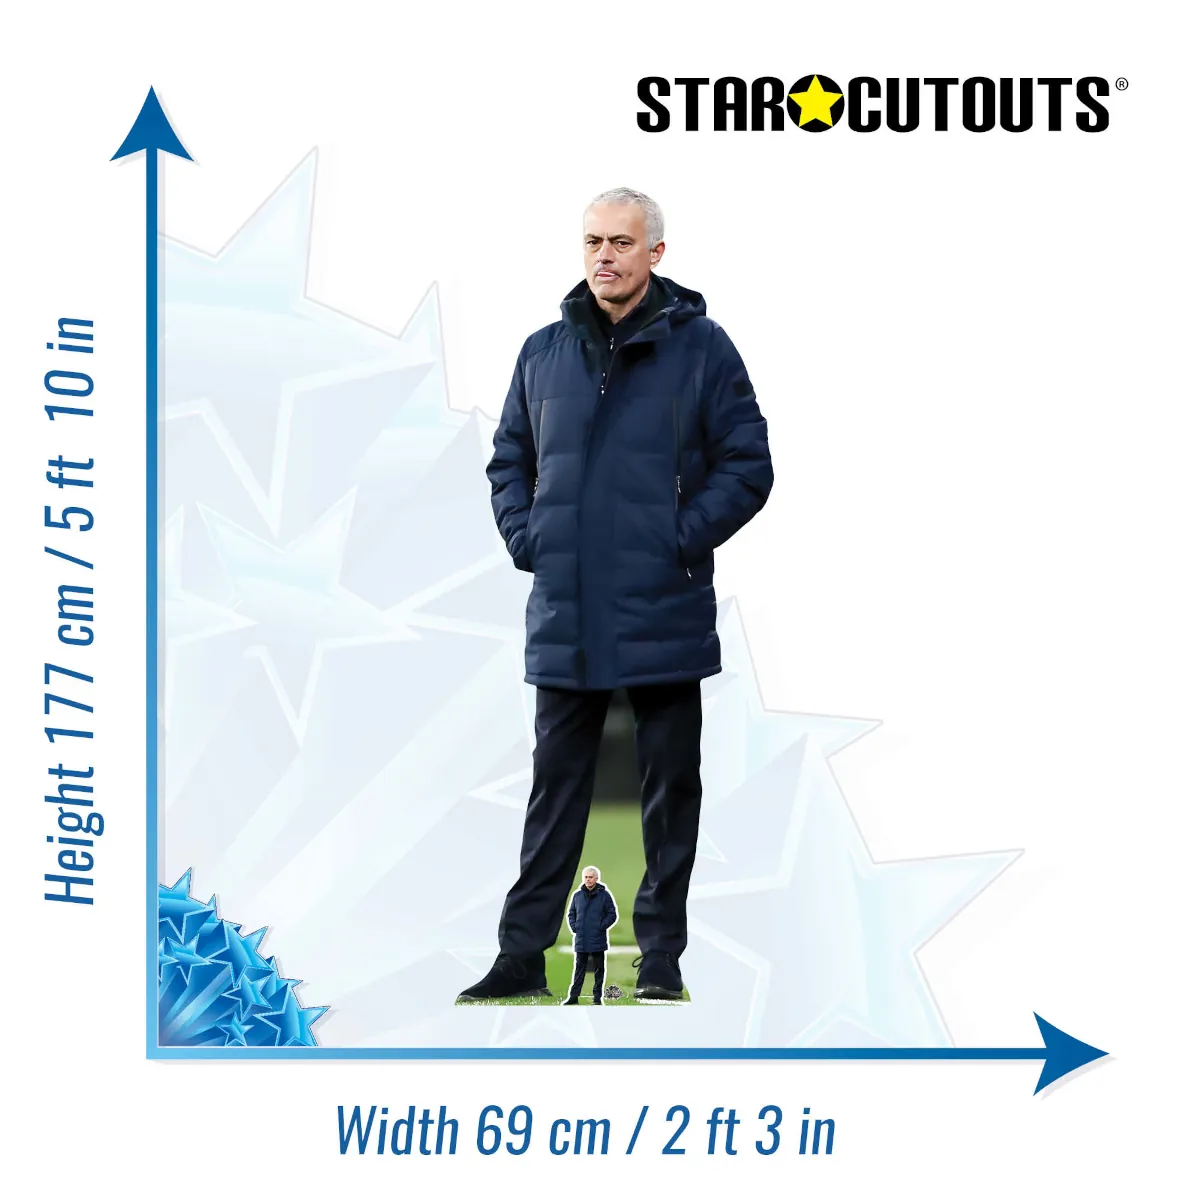 CS1037 Jose Mourinho (Portuguese Football Manager) Lifesize + Mini Cardboard Cutout Standee Size